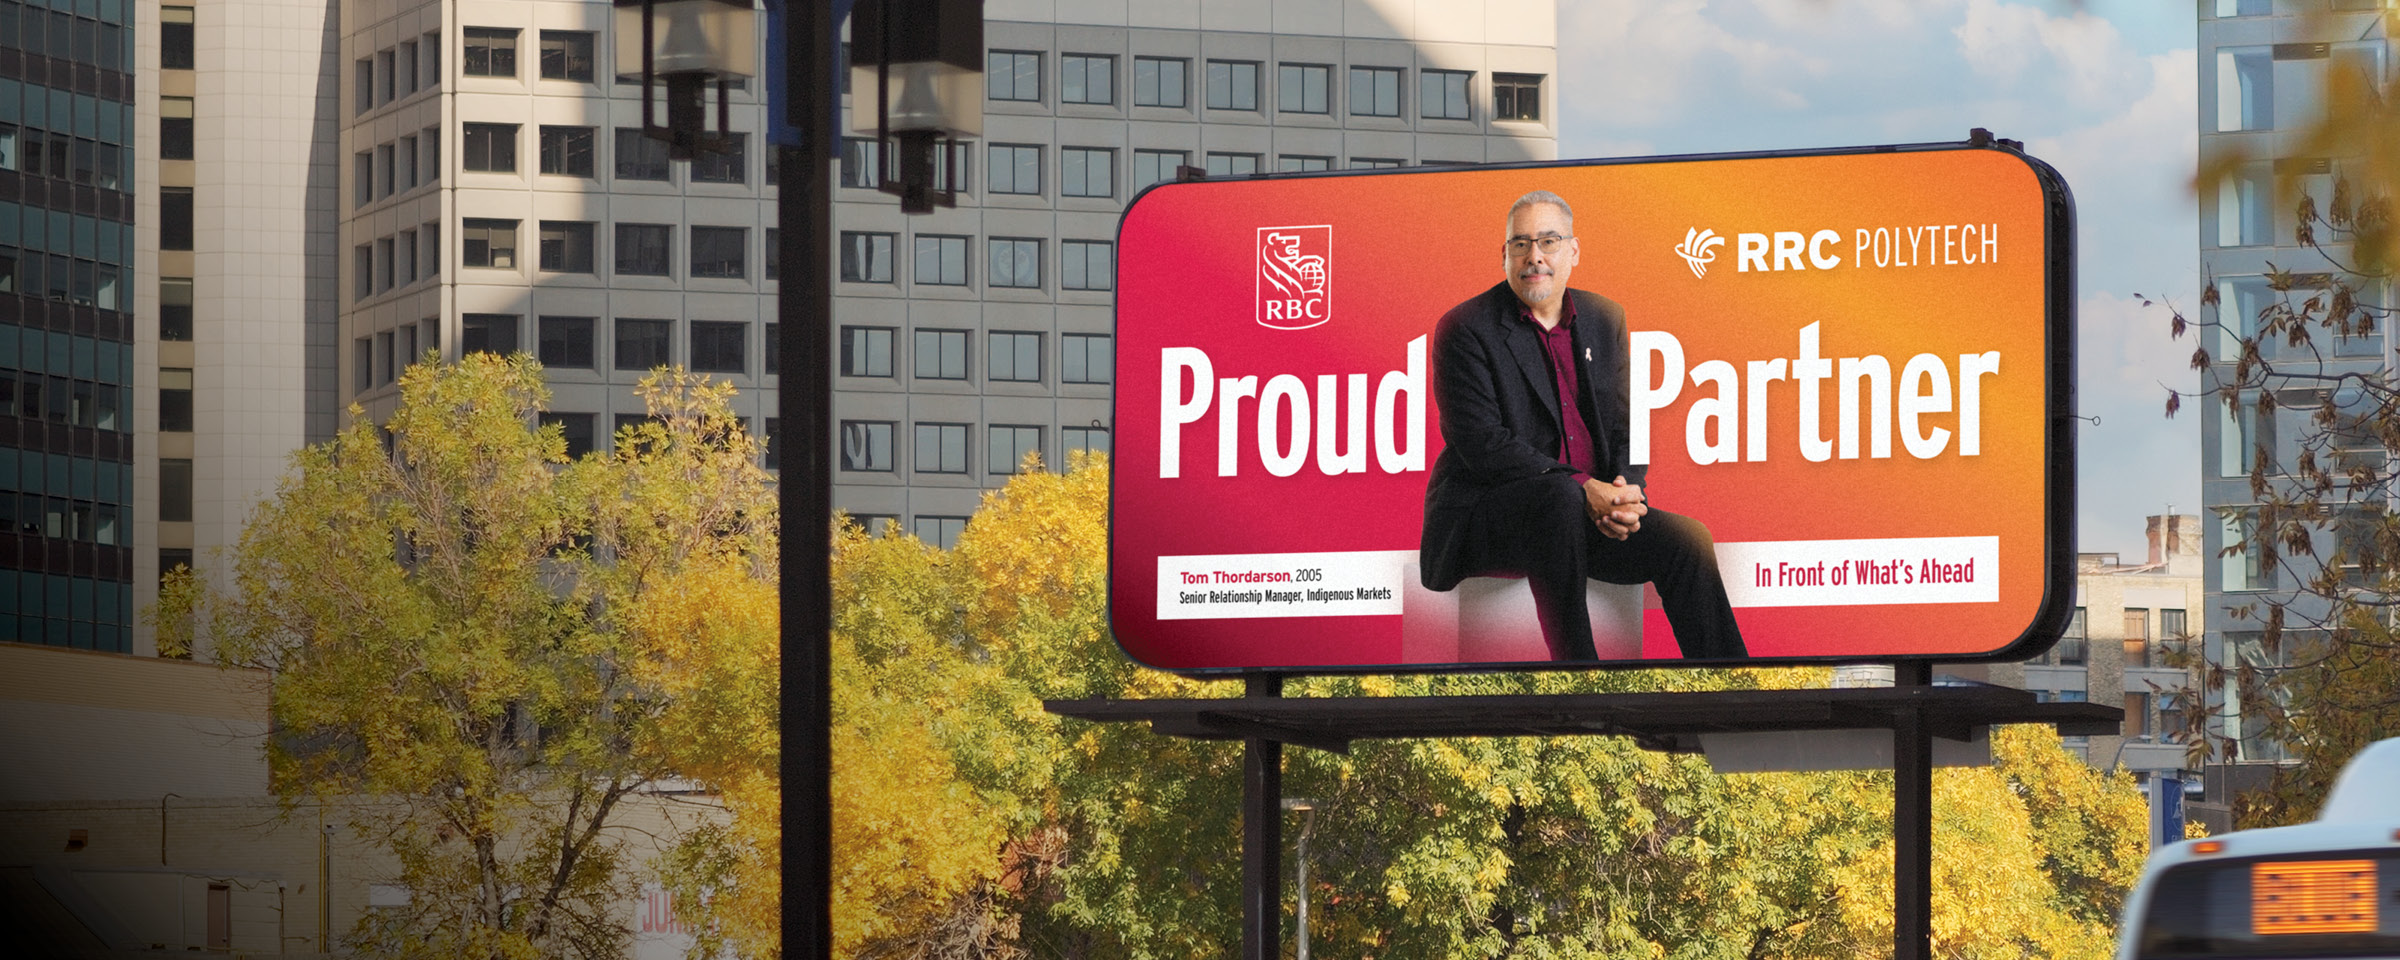 Winnipeg skyline with "Proud Partner" billboard of RRC Polytech graduate Tom Thordarson.